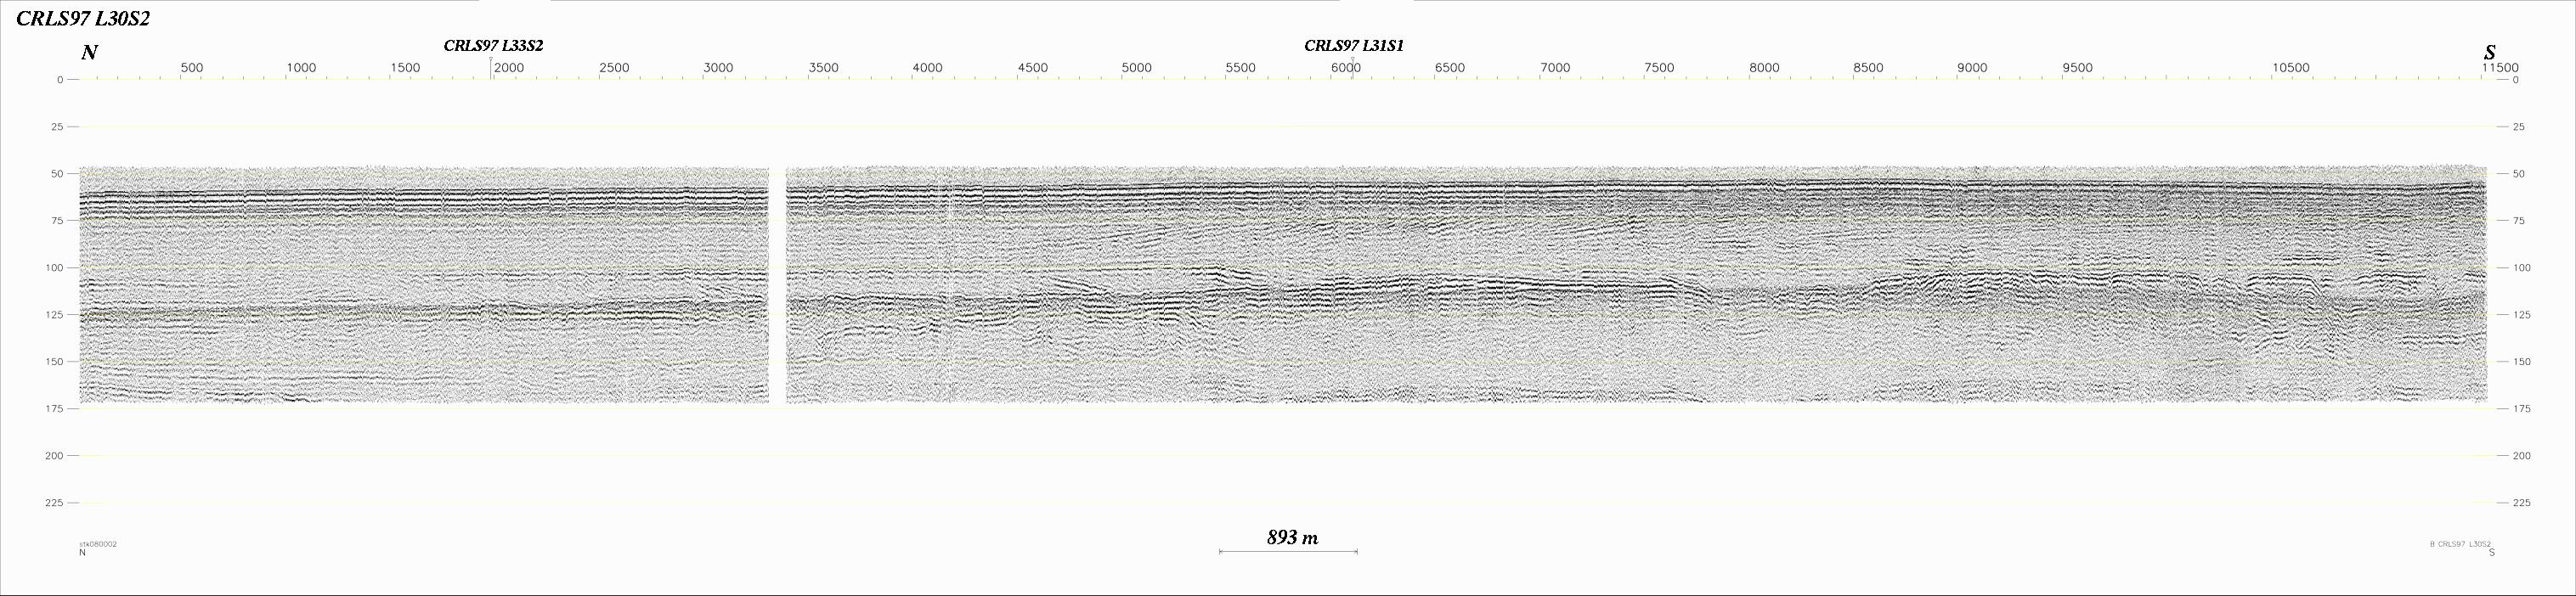 Seismic Reflection Profile Line No.: L30s2 (399688 bytes)